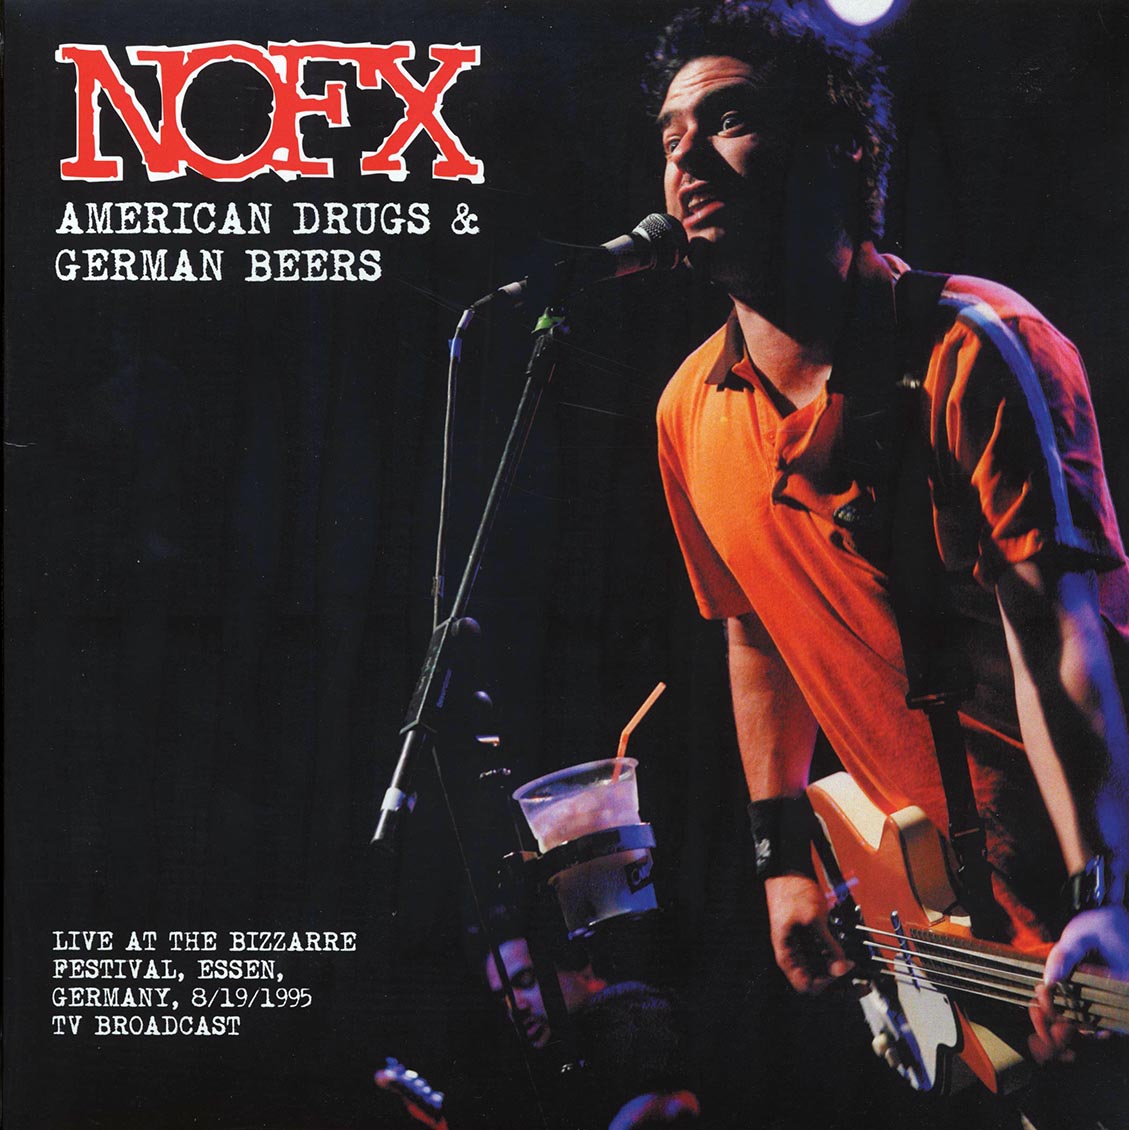 NOFX - American Drugs & German Beers: Live At The Bizzarre Festival, Essen, Germany, 8/19/1995 TV Broadcast (ltd. 500 copies made) (pink vinyl) - Vinyl LP